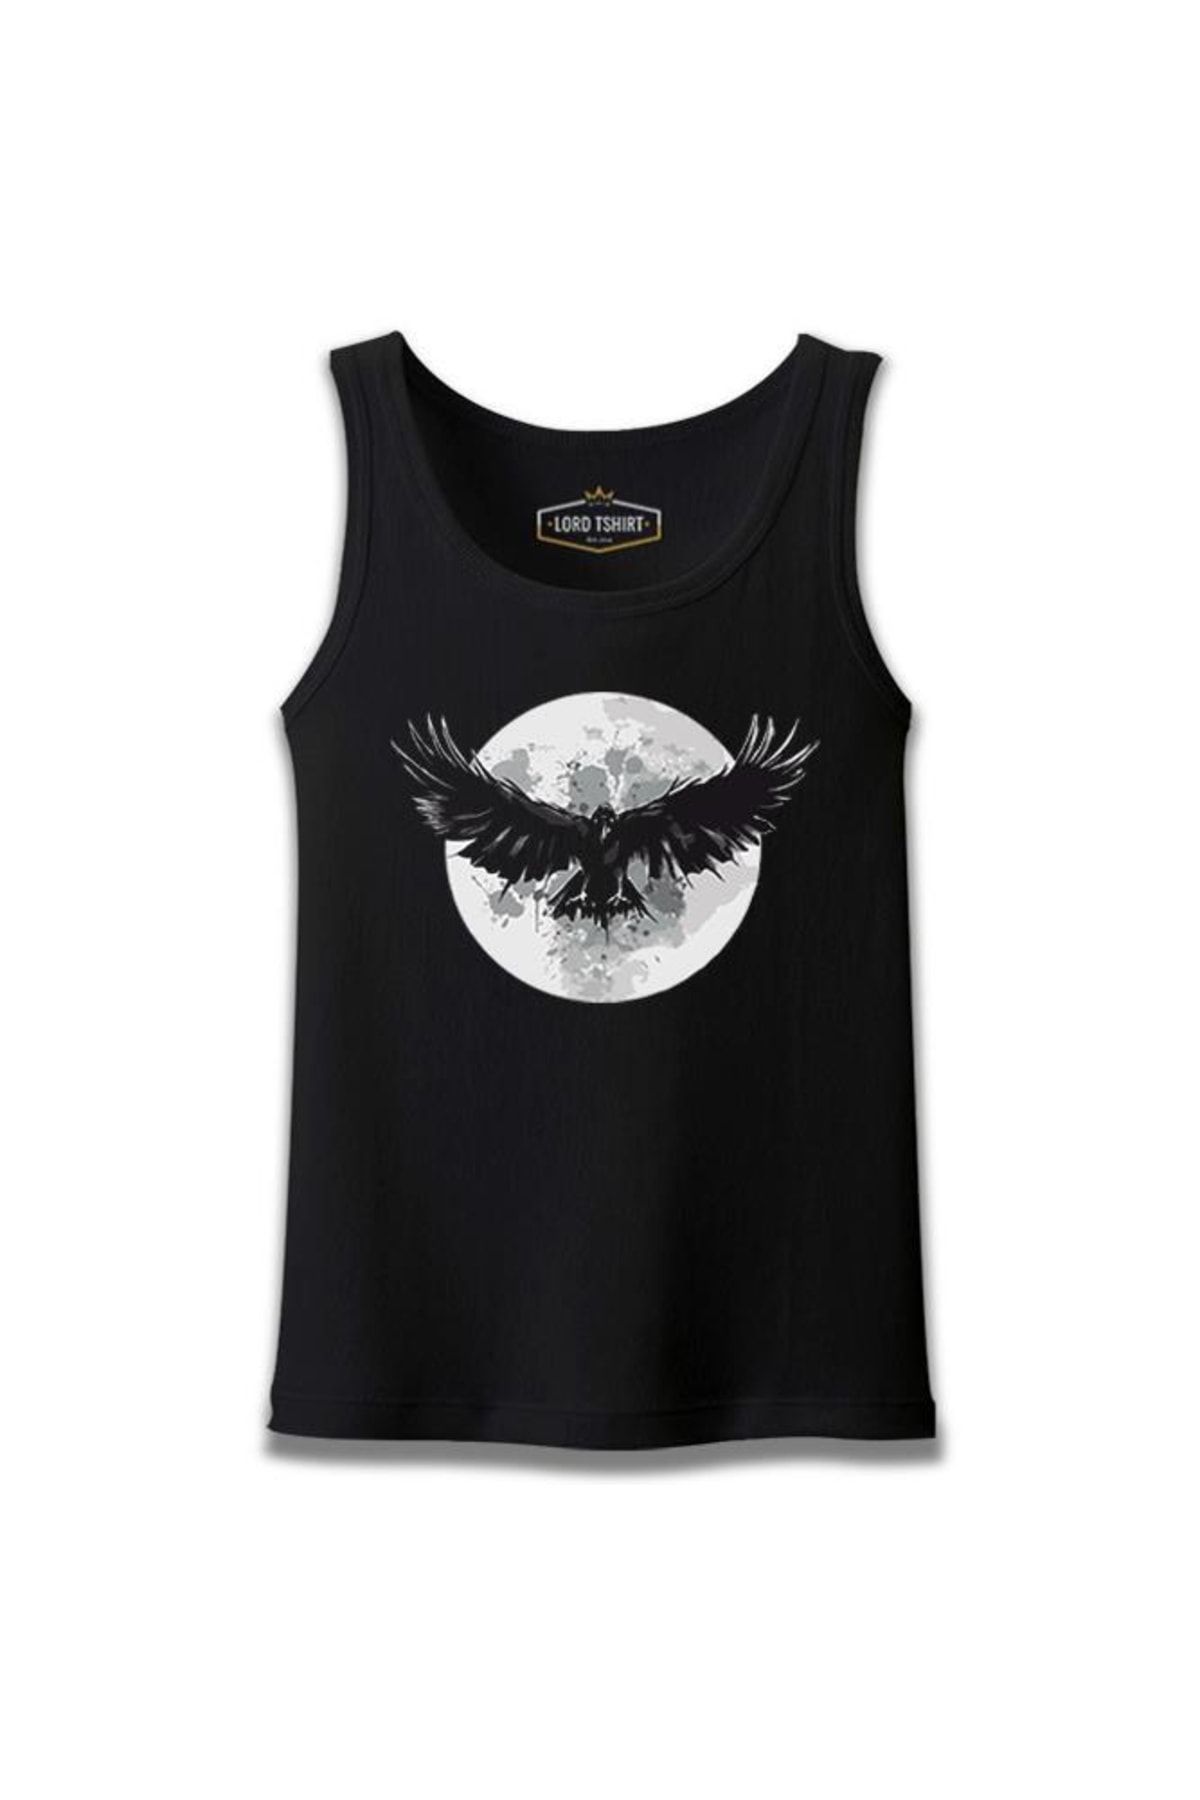 Lord T-Shirt Raven Bird Wings And Moon Siyah Erkek Atlet